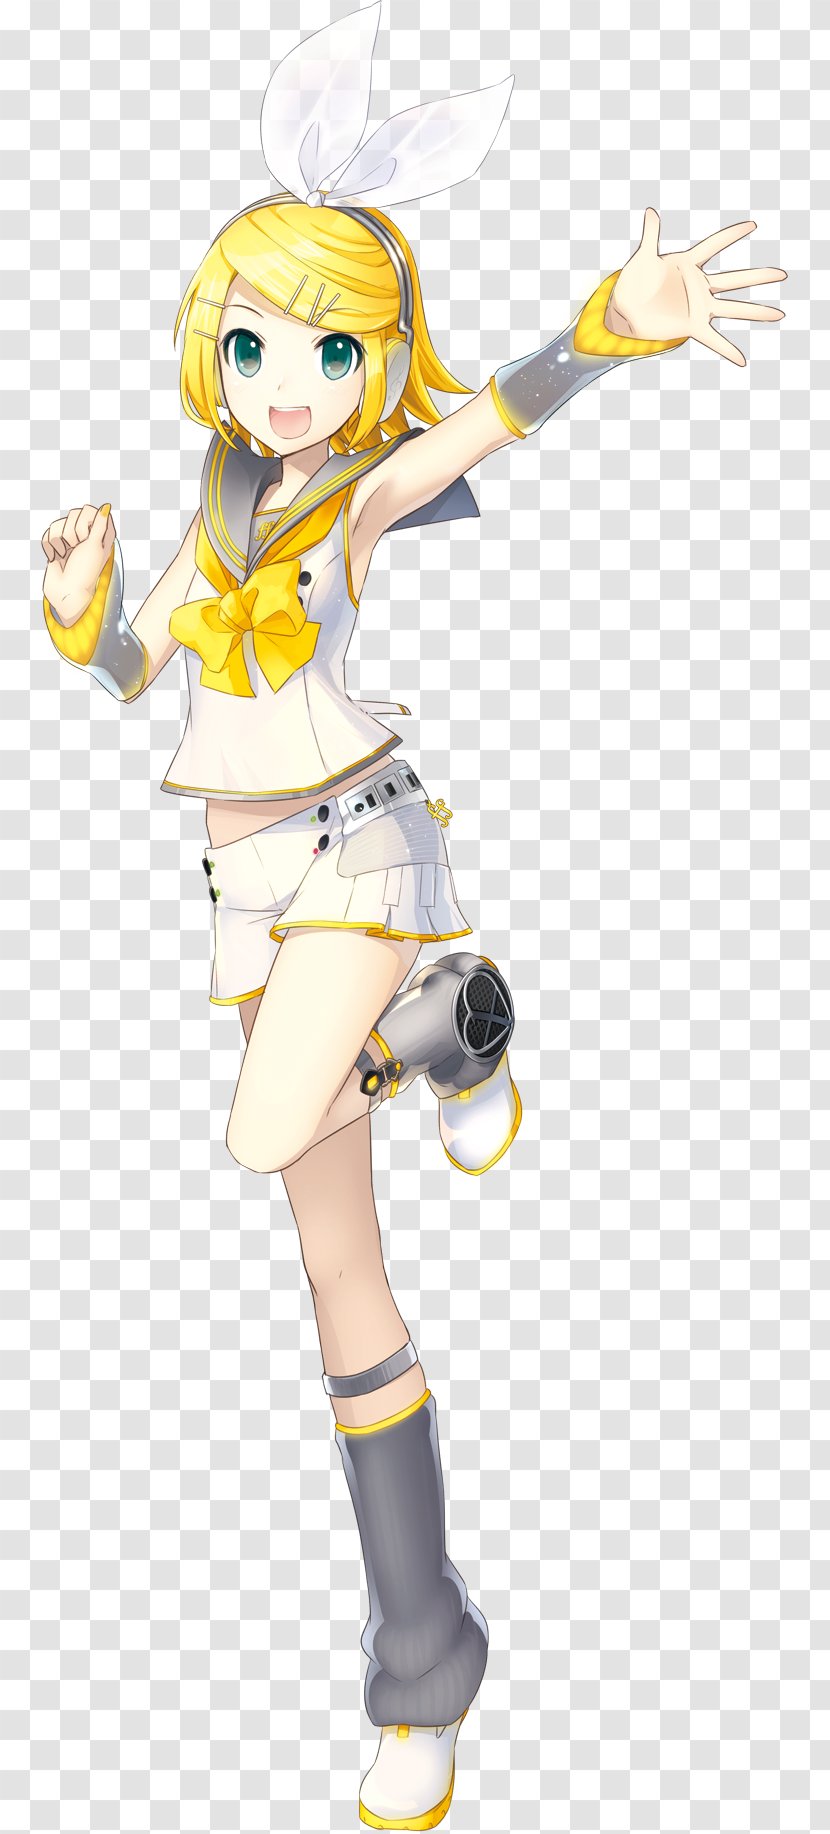 Kagamine Rin/Len Vocaloid 4 Meiko Kaito - Cartoon - Tohoku Zunko Transparent PNG